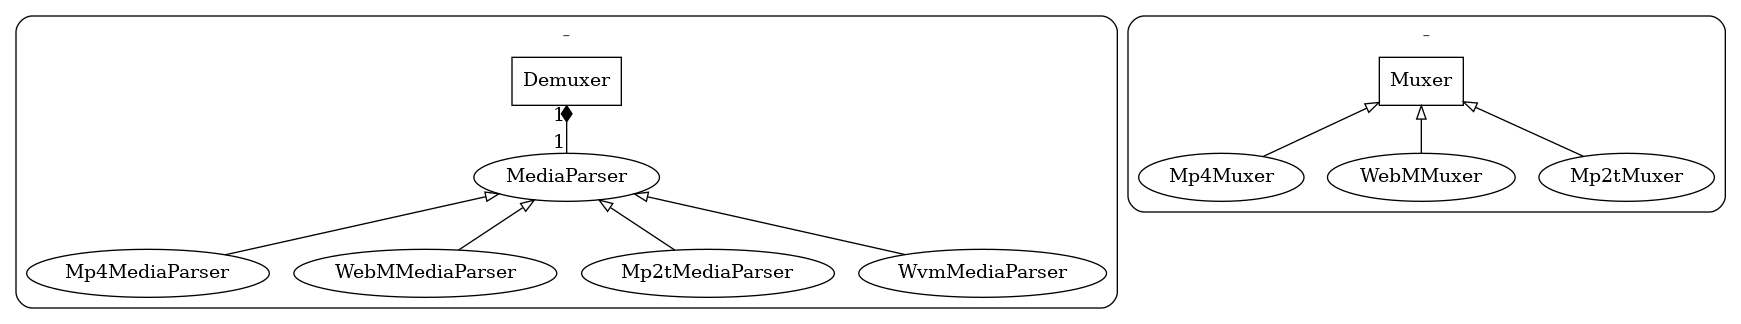 digraph shaka_packager {
    subgraph cluster_demuxer {
      style=rounded
      label=<<u> </u>>

      Demuxer2 [label="Demuxer" shape=rectangle]
      Demuxer2 -> MediaParser
          [dir=back arrowtail=diamond headlabel="1" taillabel="1"]
      MediaParser -> Mp4MediaParser, WebMMediaParser, Mp2tMediaParser,
          WvmMediaParser [dir=back arrowtail=onormal]
    }

    subgraph cluster_muxer {
      style=rounded
      label=<<u> </u>>

      Muxer2 [label="Muxer" shape=rectangle]
      Muxer2 -> Mp4Muxer, WebMMuxer, Mp2tMuxer [dir=back arrowtail=onormal]
    }
}